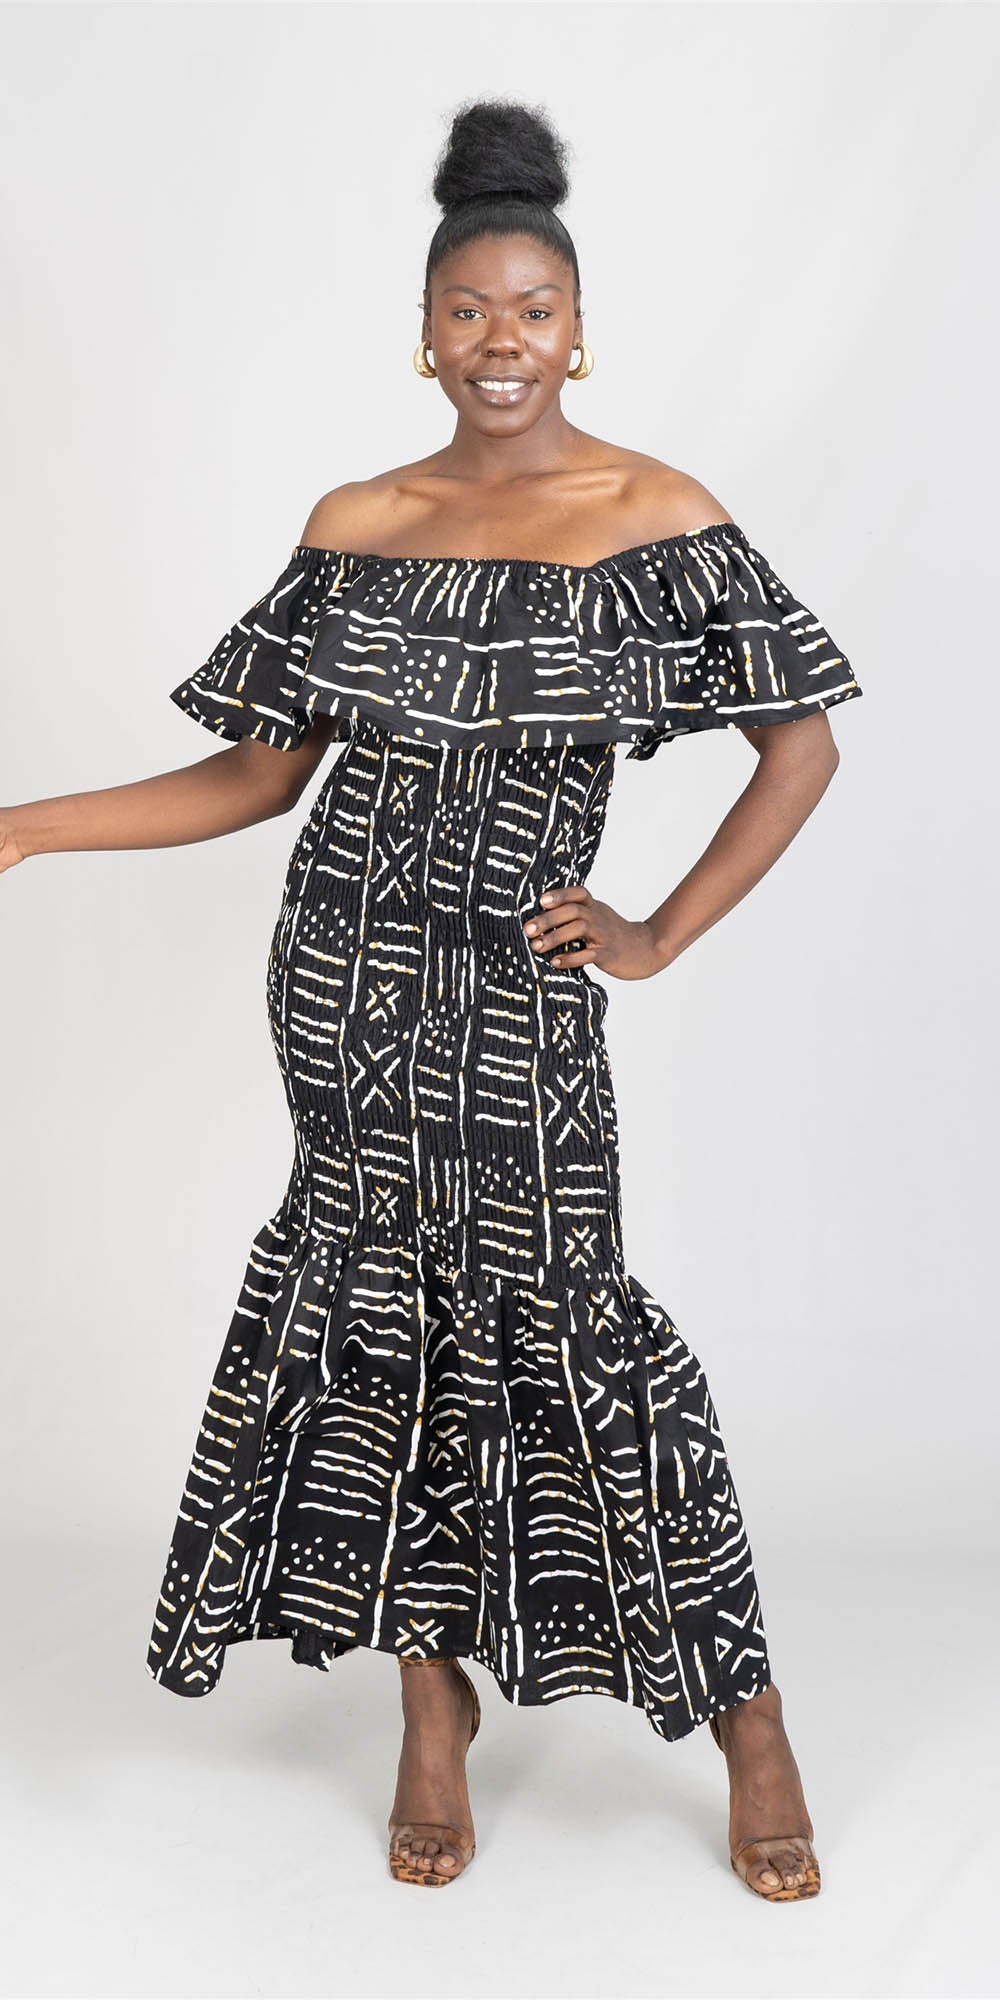 KaraChic - 9015 - 569 - African Print Smock Dress